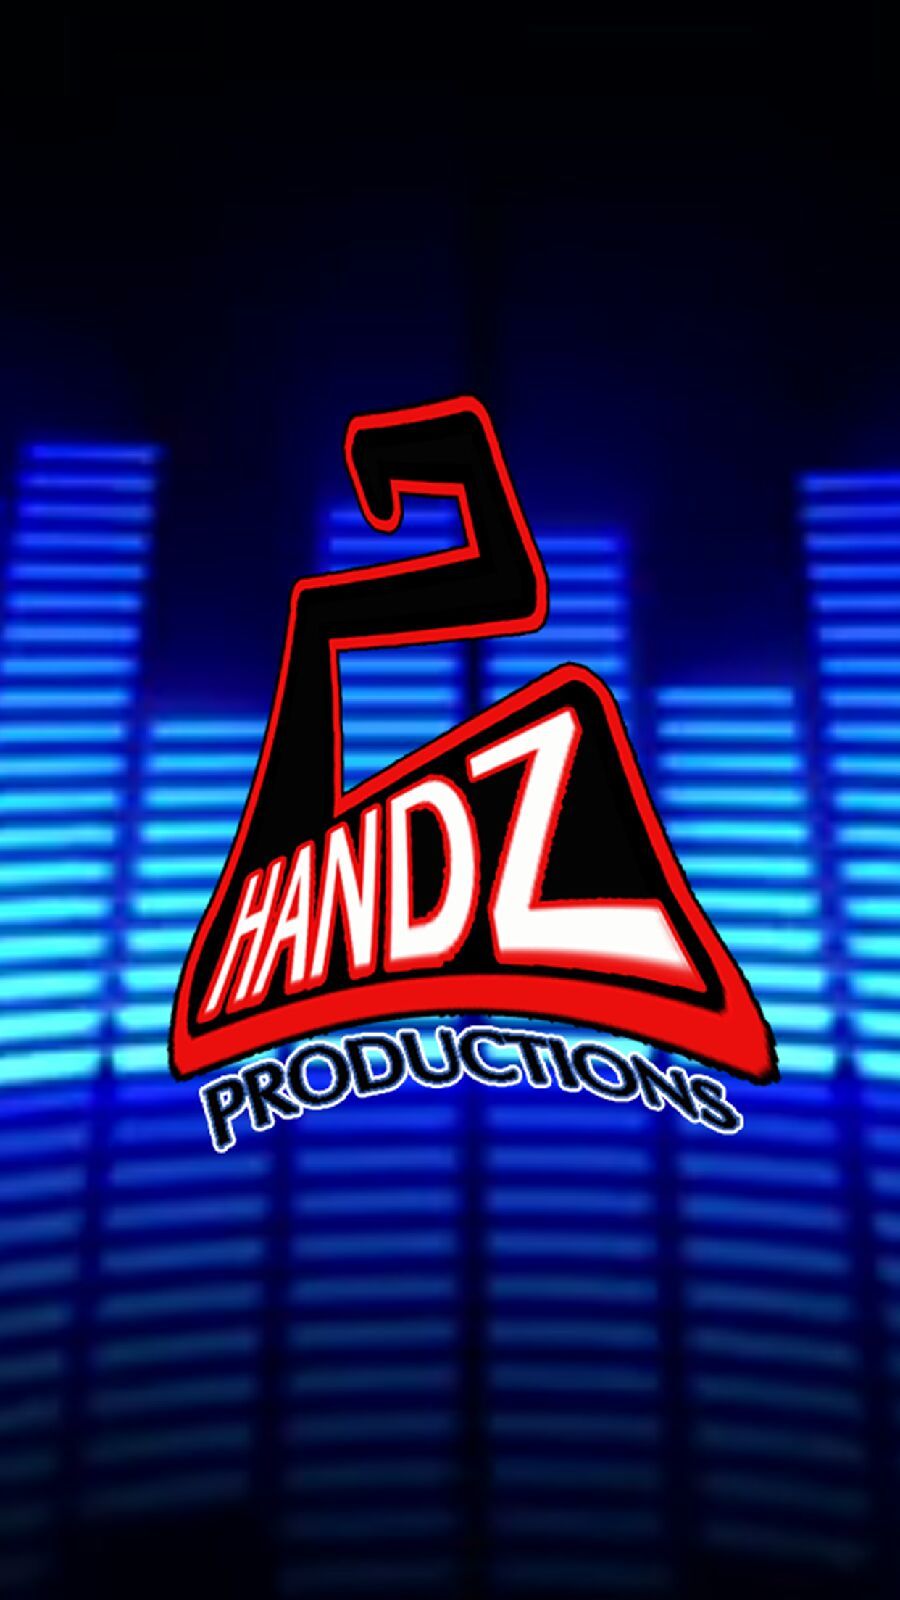 2 Handz Productions